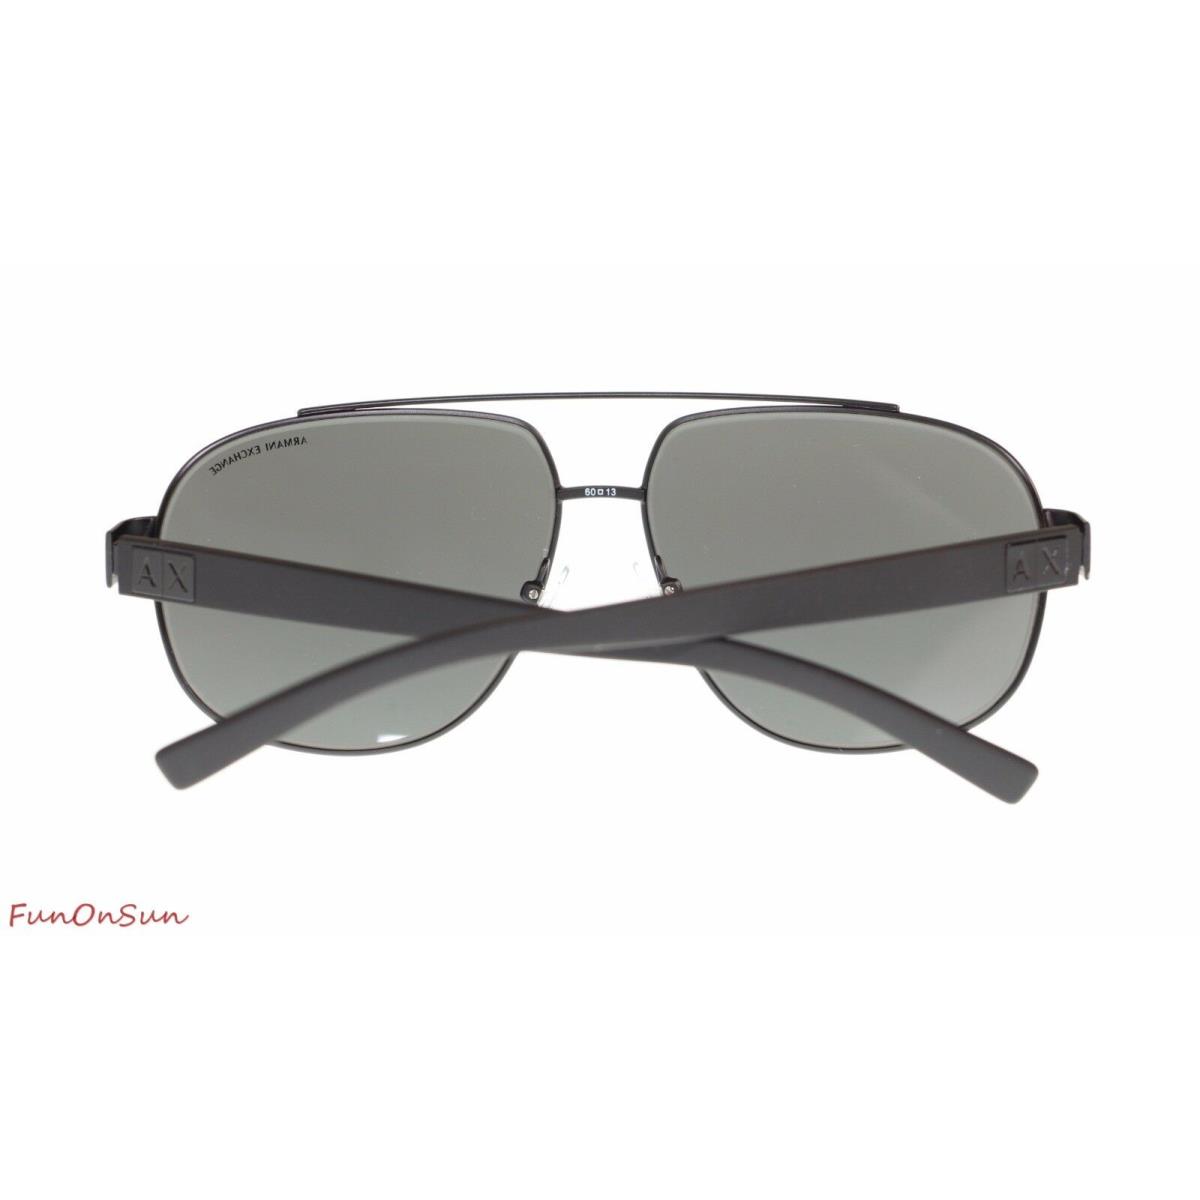 Armani Exchange sunglasses  - Black Frame, Silver Lens 2